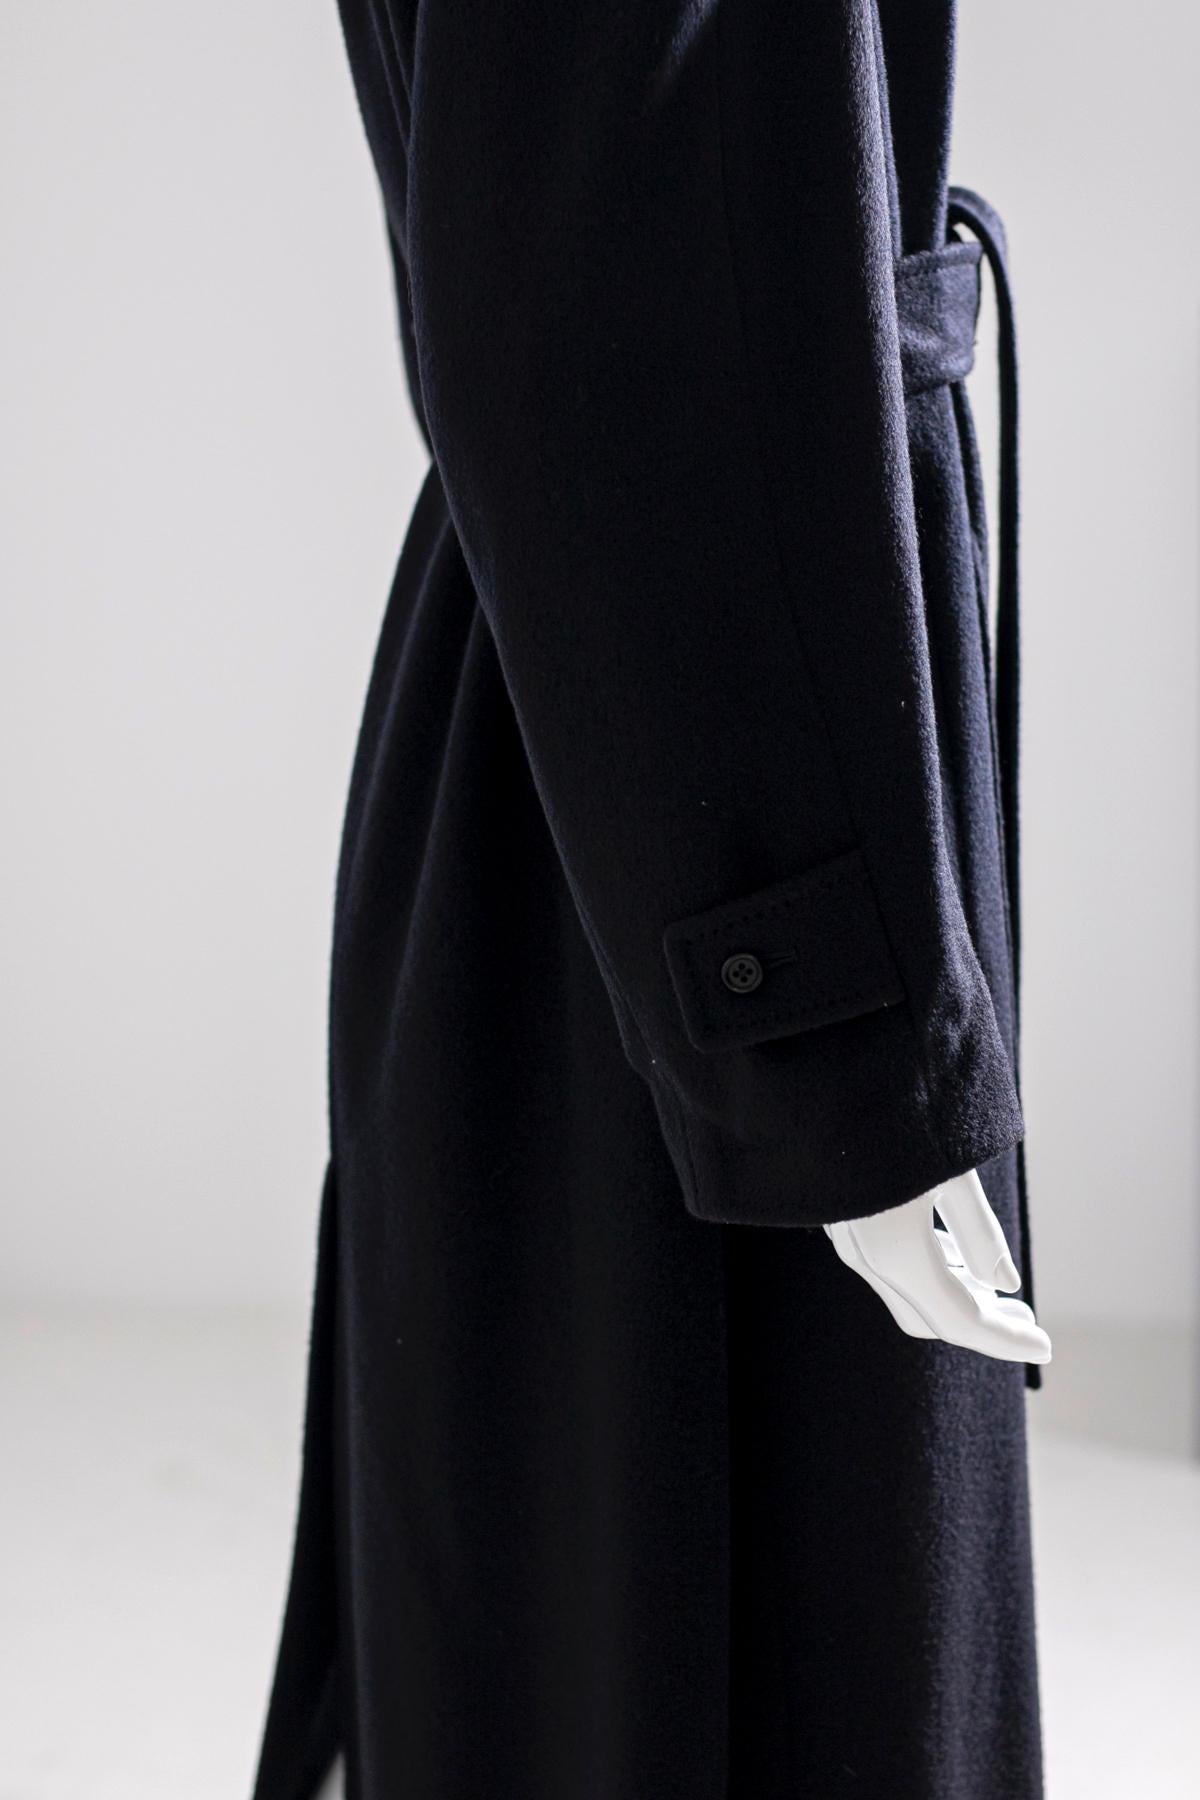 Aquascutum Women's Coat 1990s Black-Colored In Excellent Condition For Sale In Milano, IT